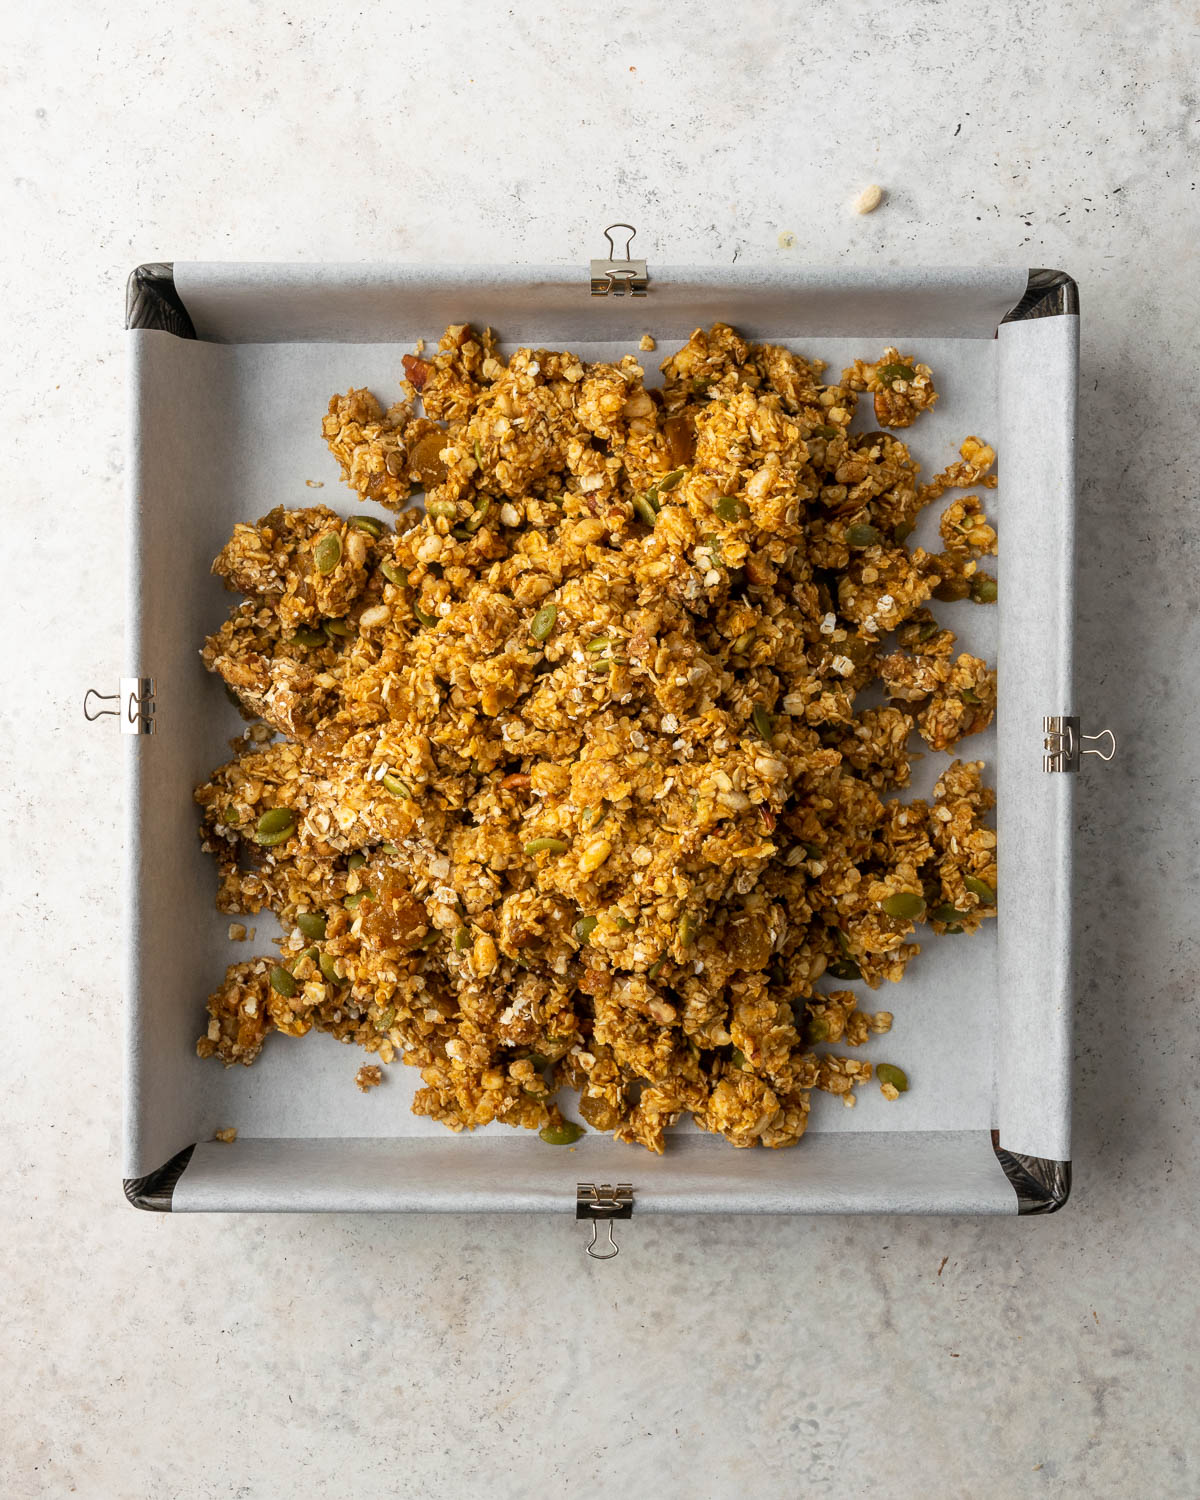 Granola bar mixture poured into a square baking pan.